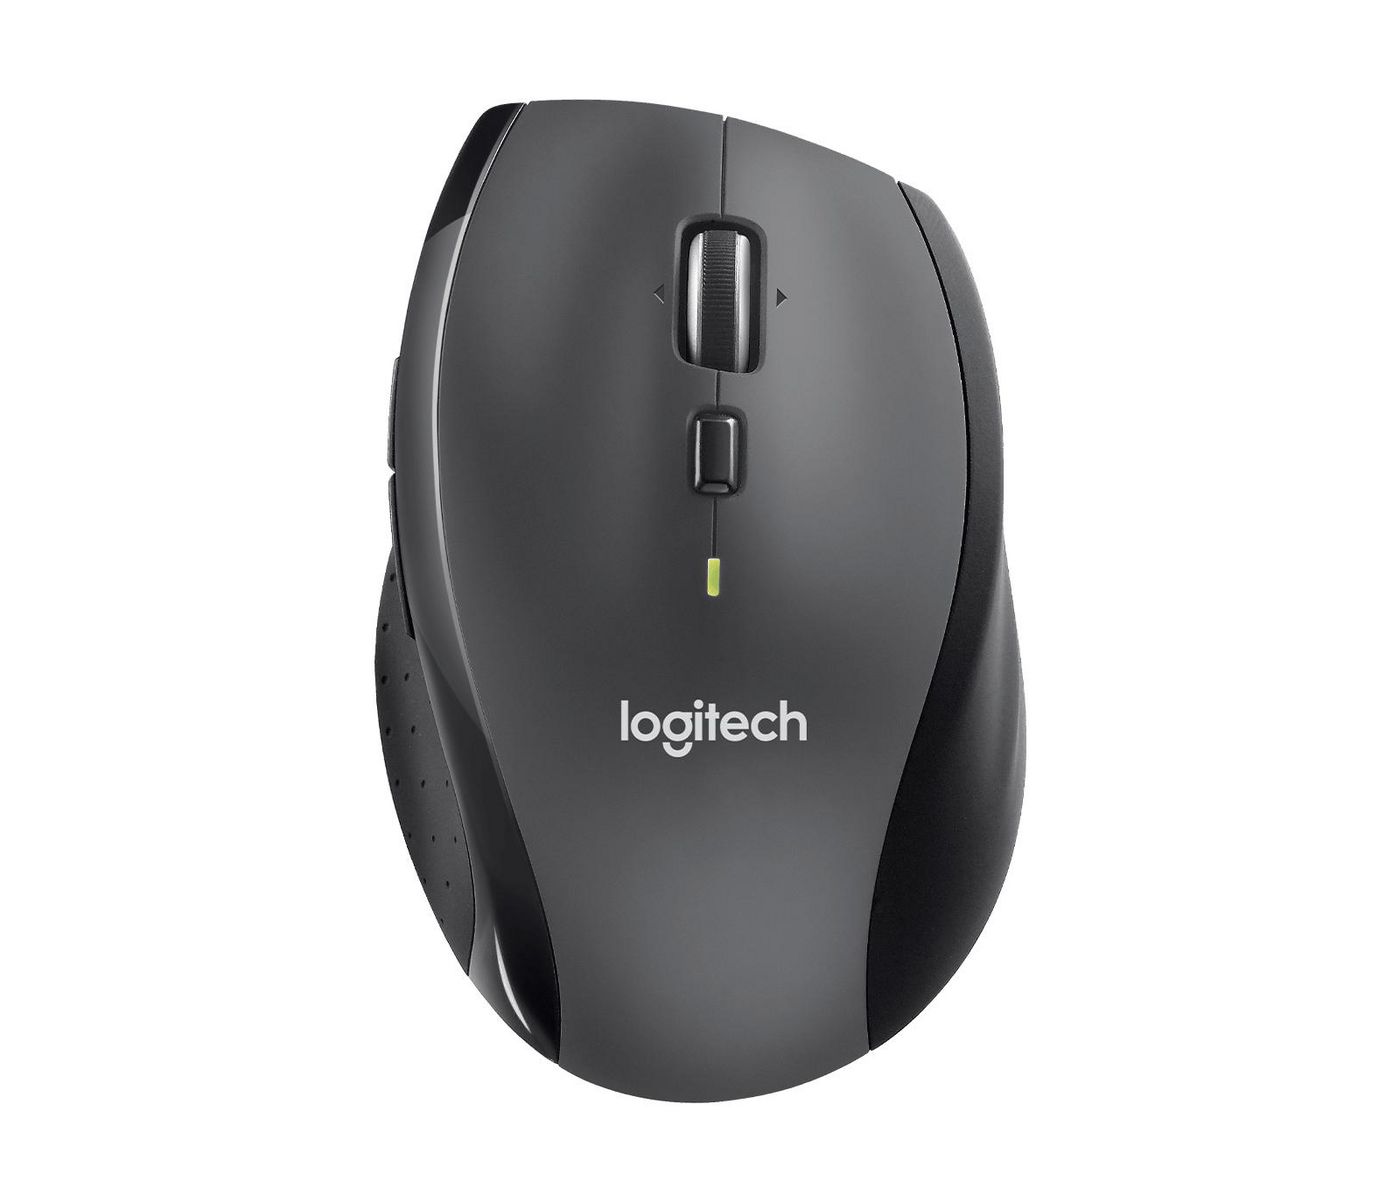 Logitech 910-003443 M705 Mouse, Wireless 